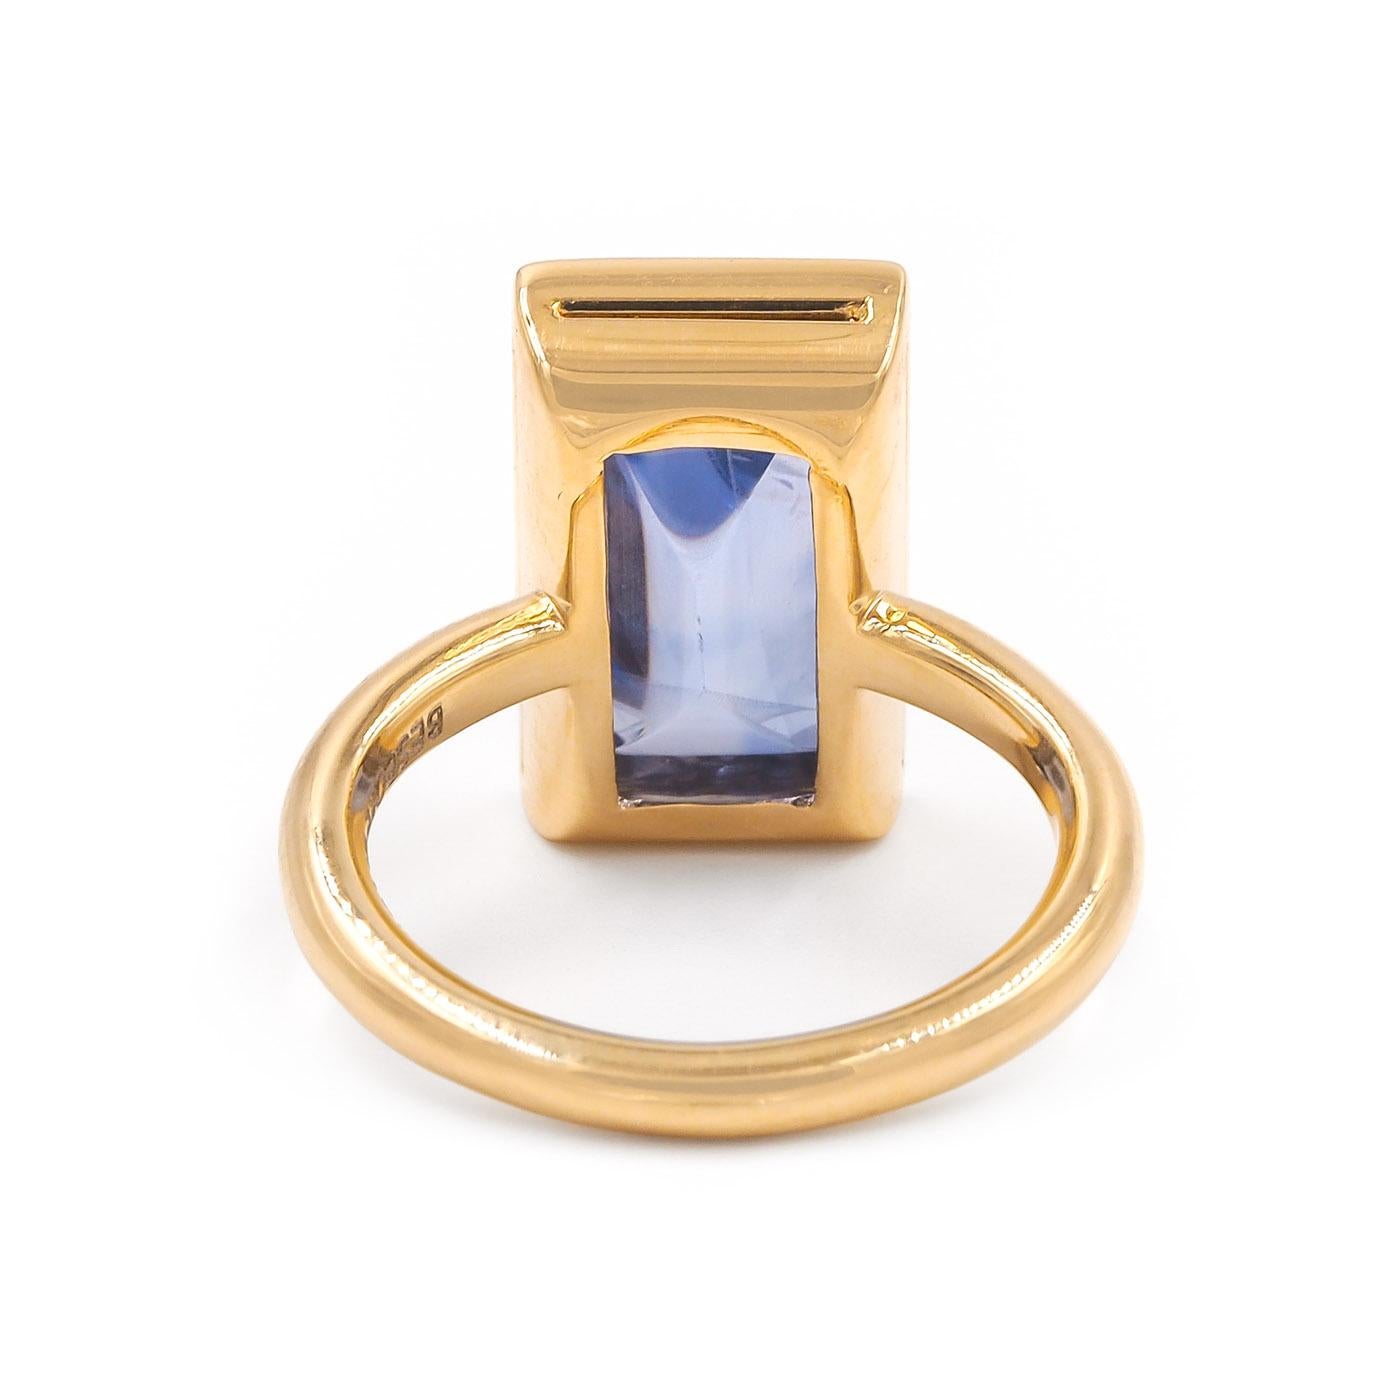 Square Cut 6.50 Carat Ceylon AGL Certified Blue Sapphire Ring from Bespoke by Platt